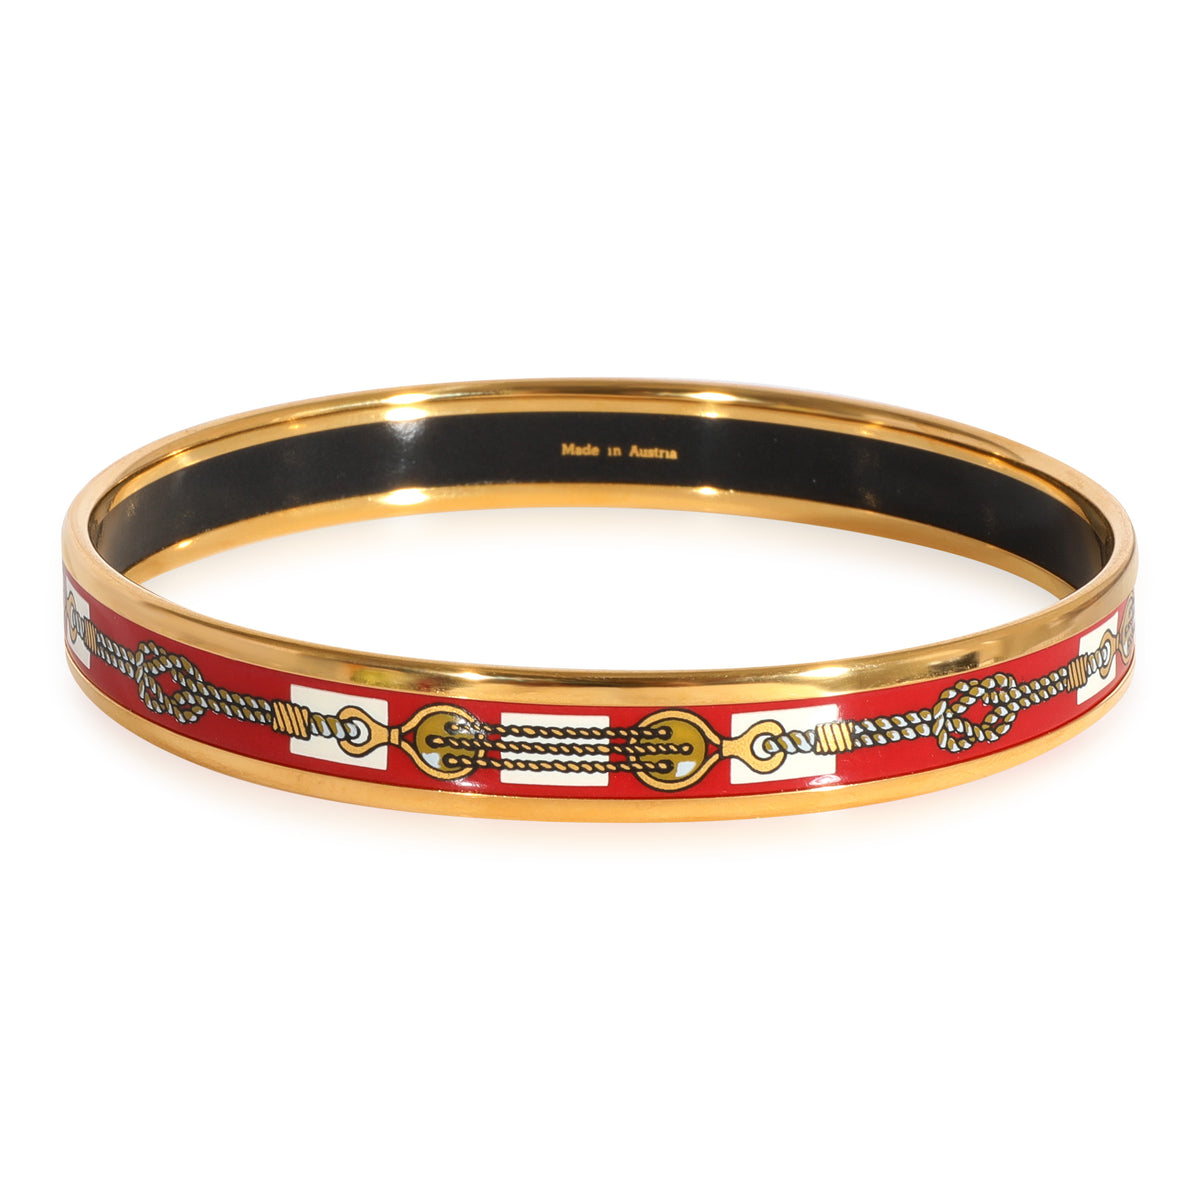 Hermès Plated Narrow Red Enamel Bracelet with Rope Design (62MM)